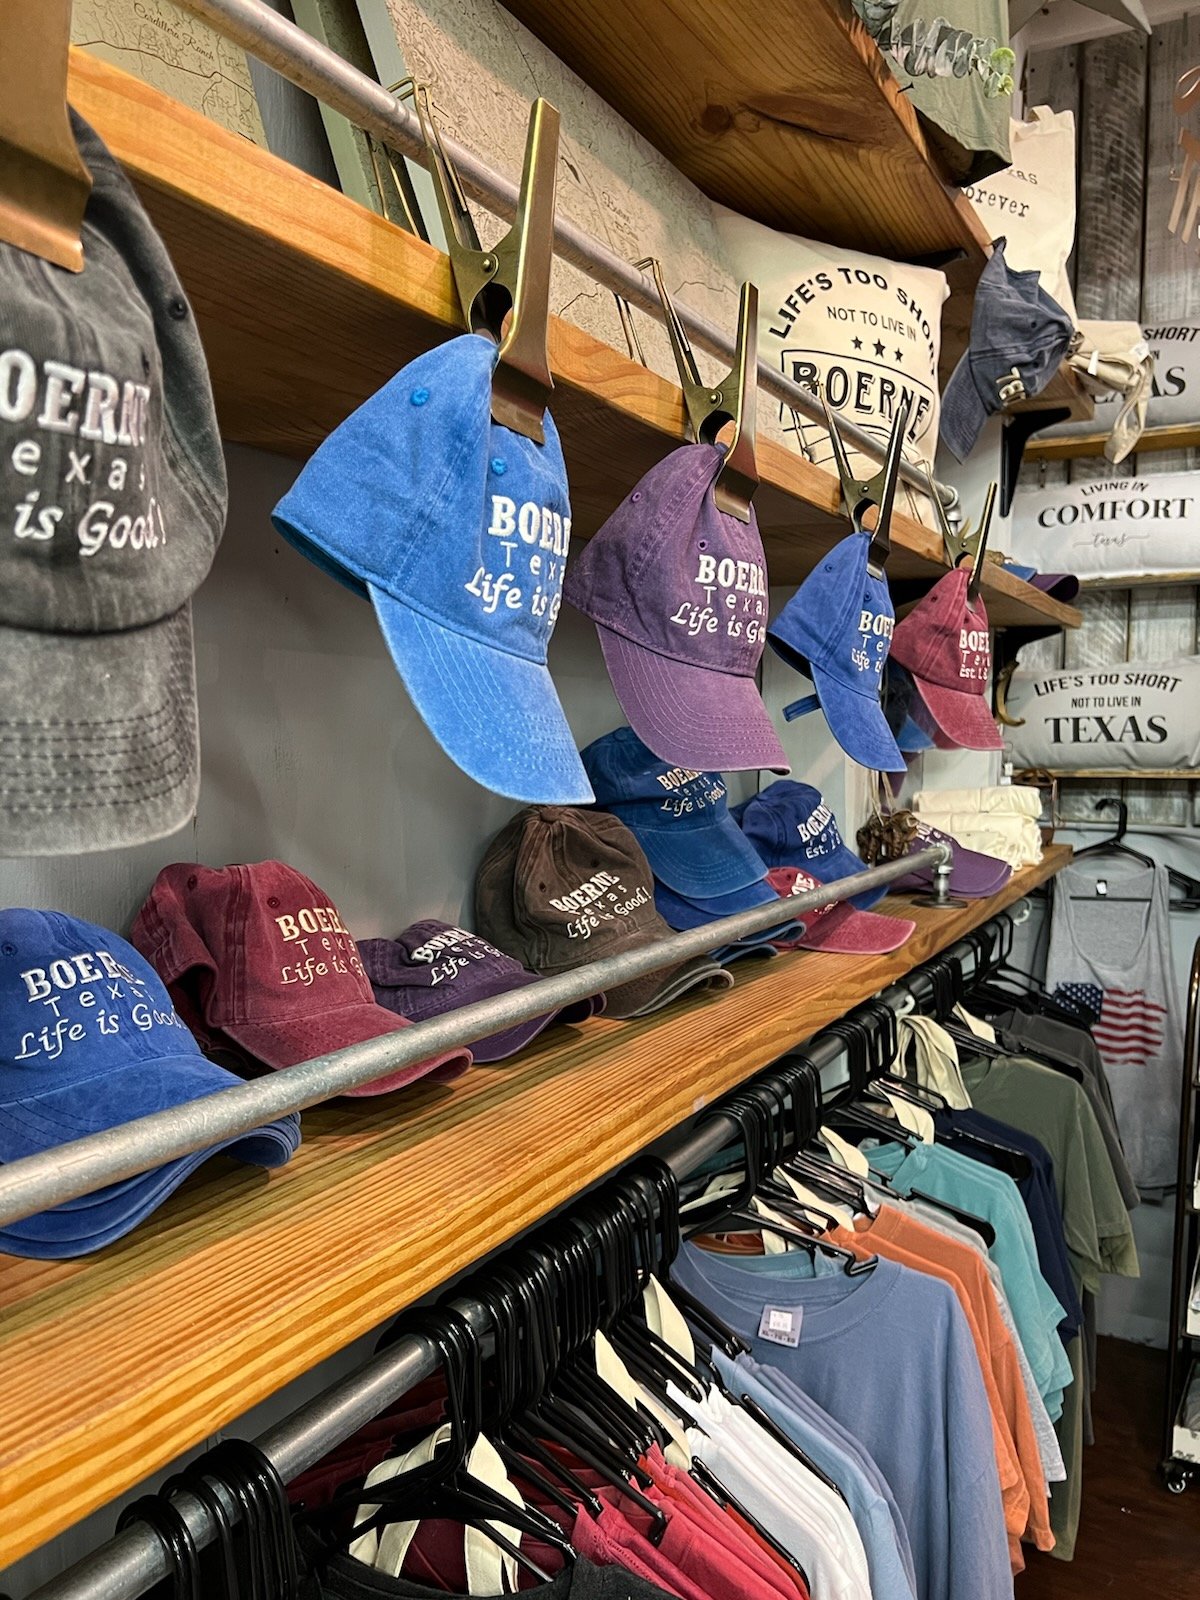 Boerne, Texas pillows, t-shirts, and hats baseball caps available at Corner Cartel